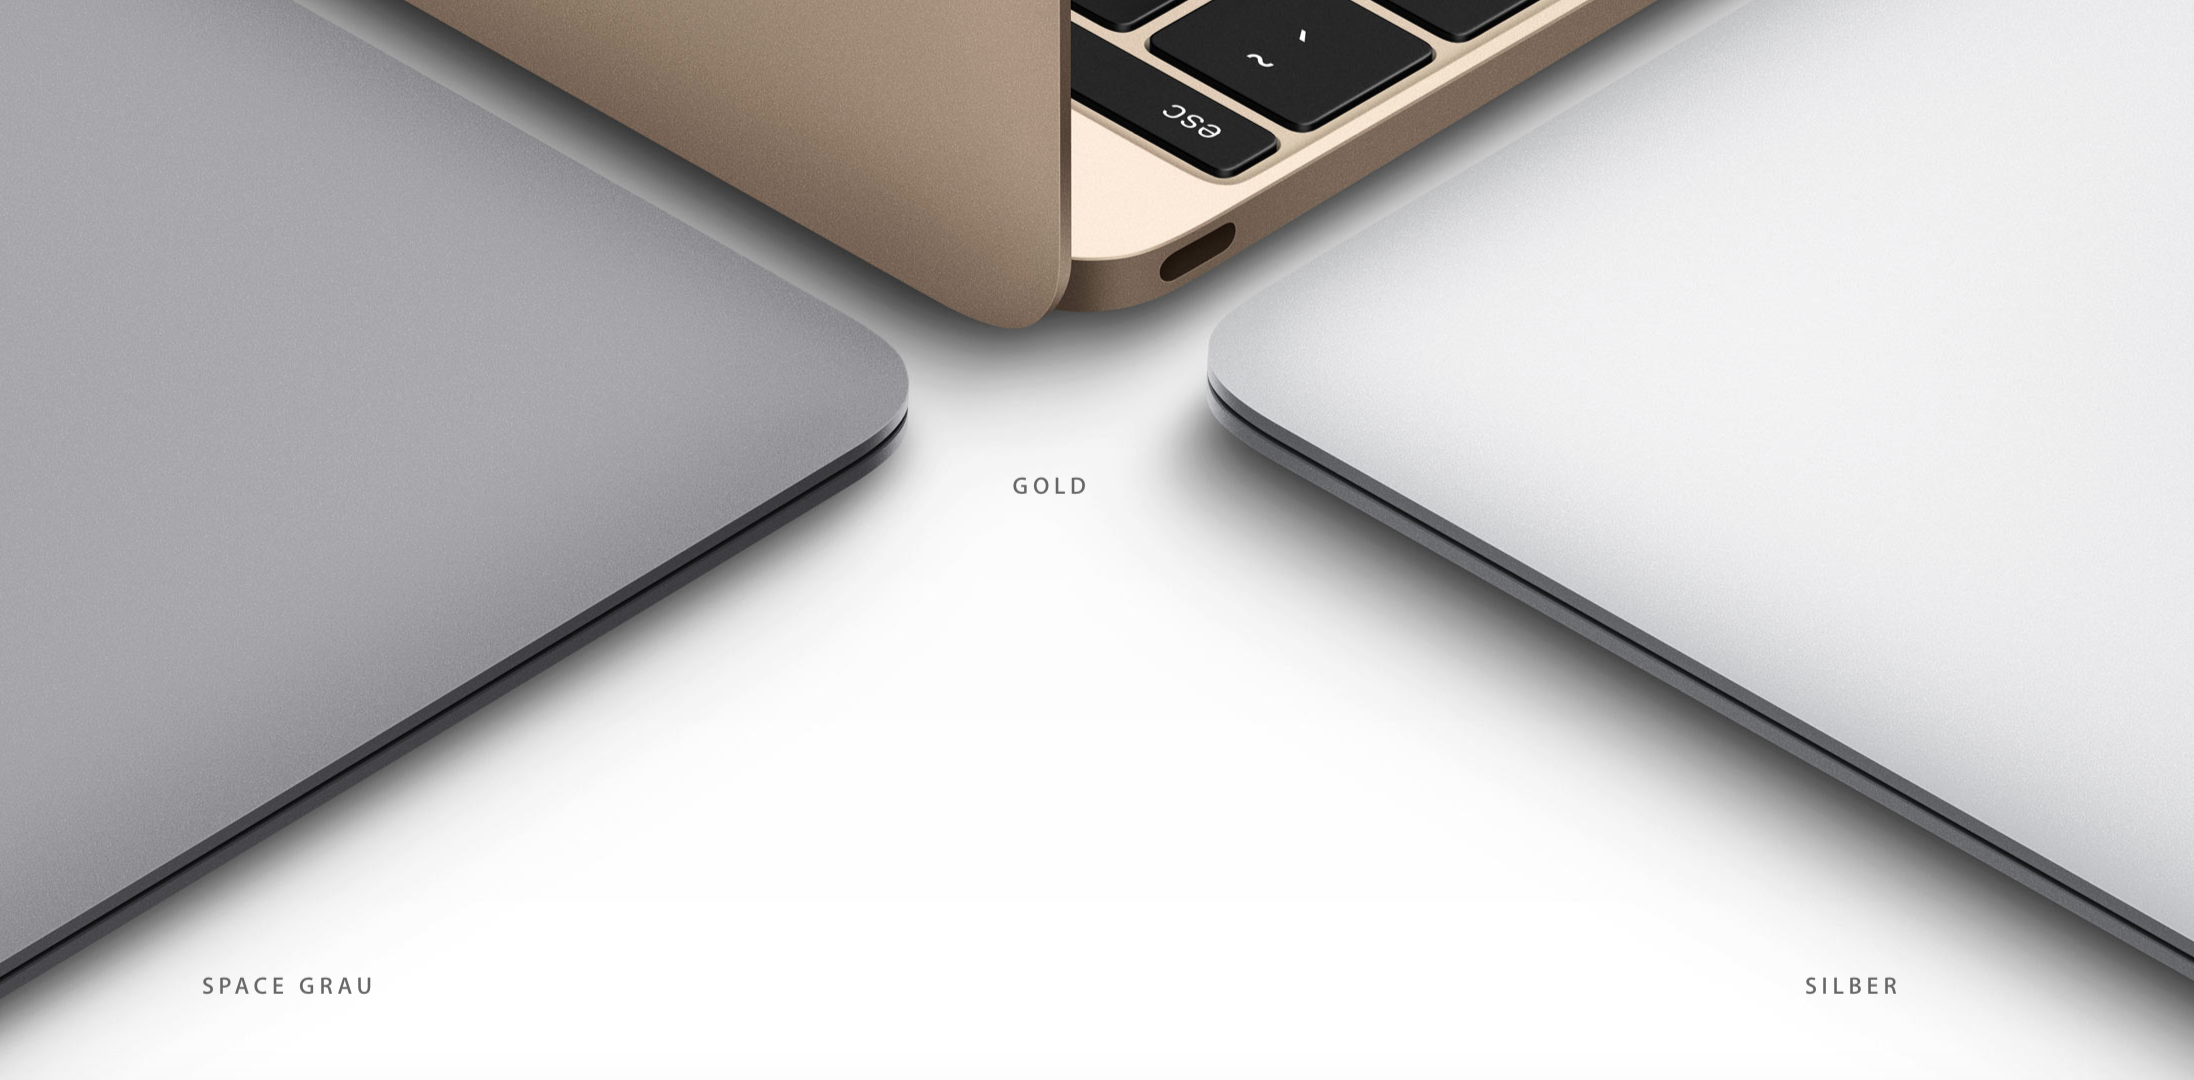  Apple MacBook (Mid 2015)